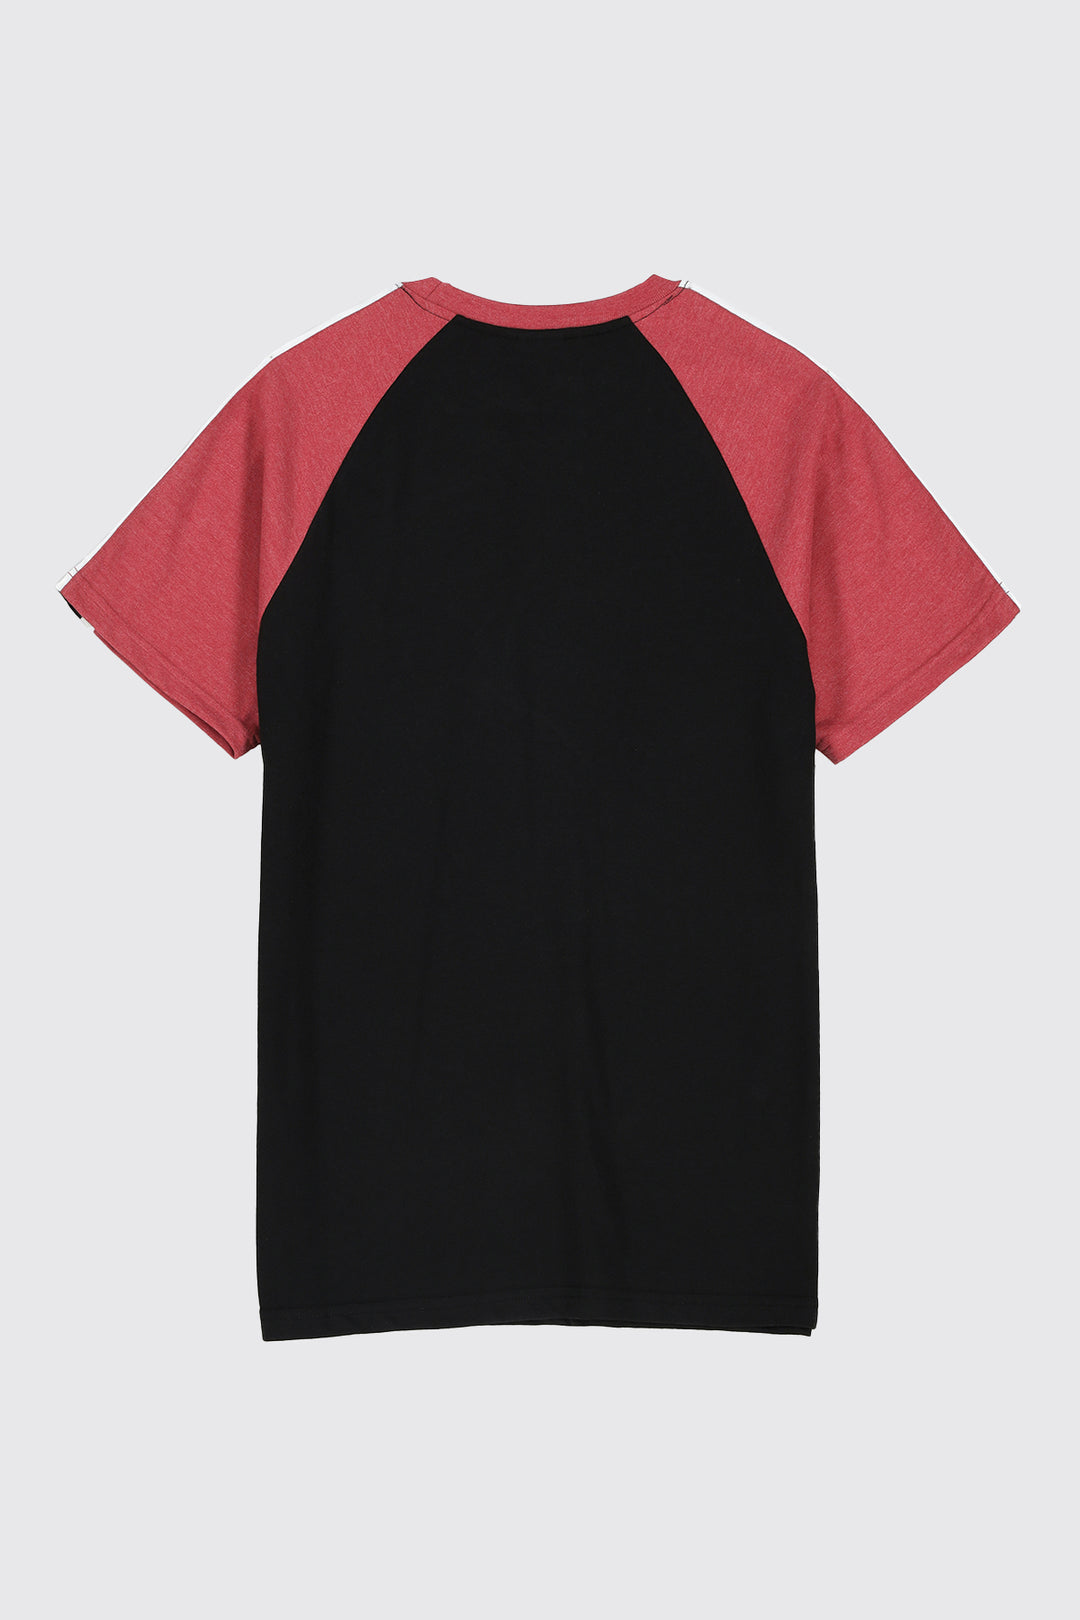 Black & Maroon Melange Paneled Raglan T-Shirt (Plus Size) - A23 - MT0283P